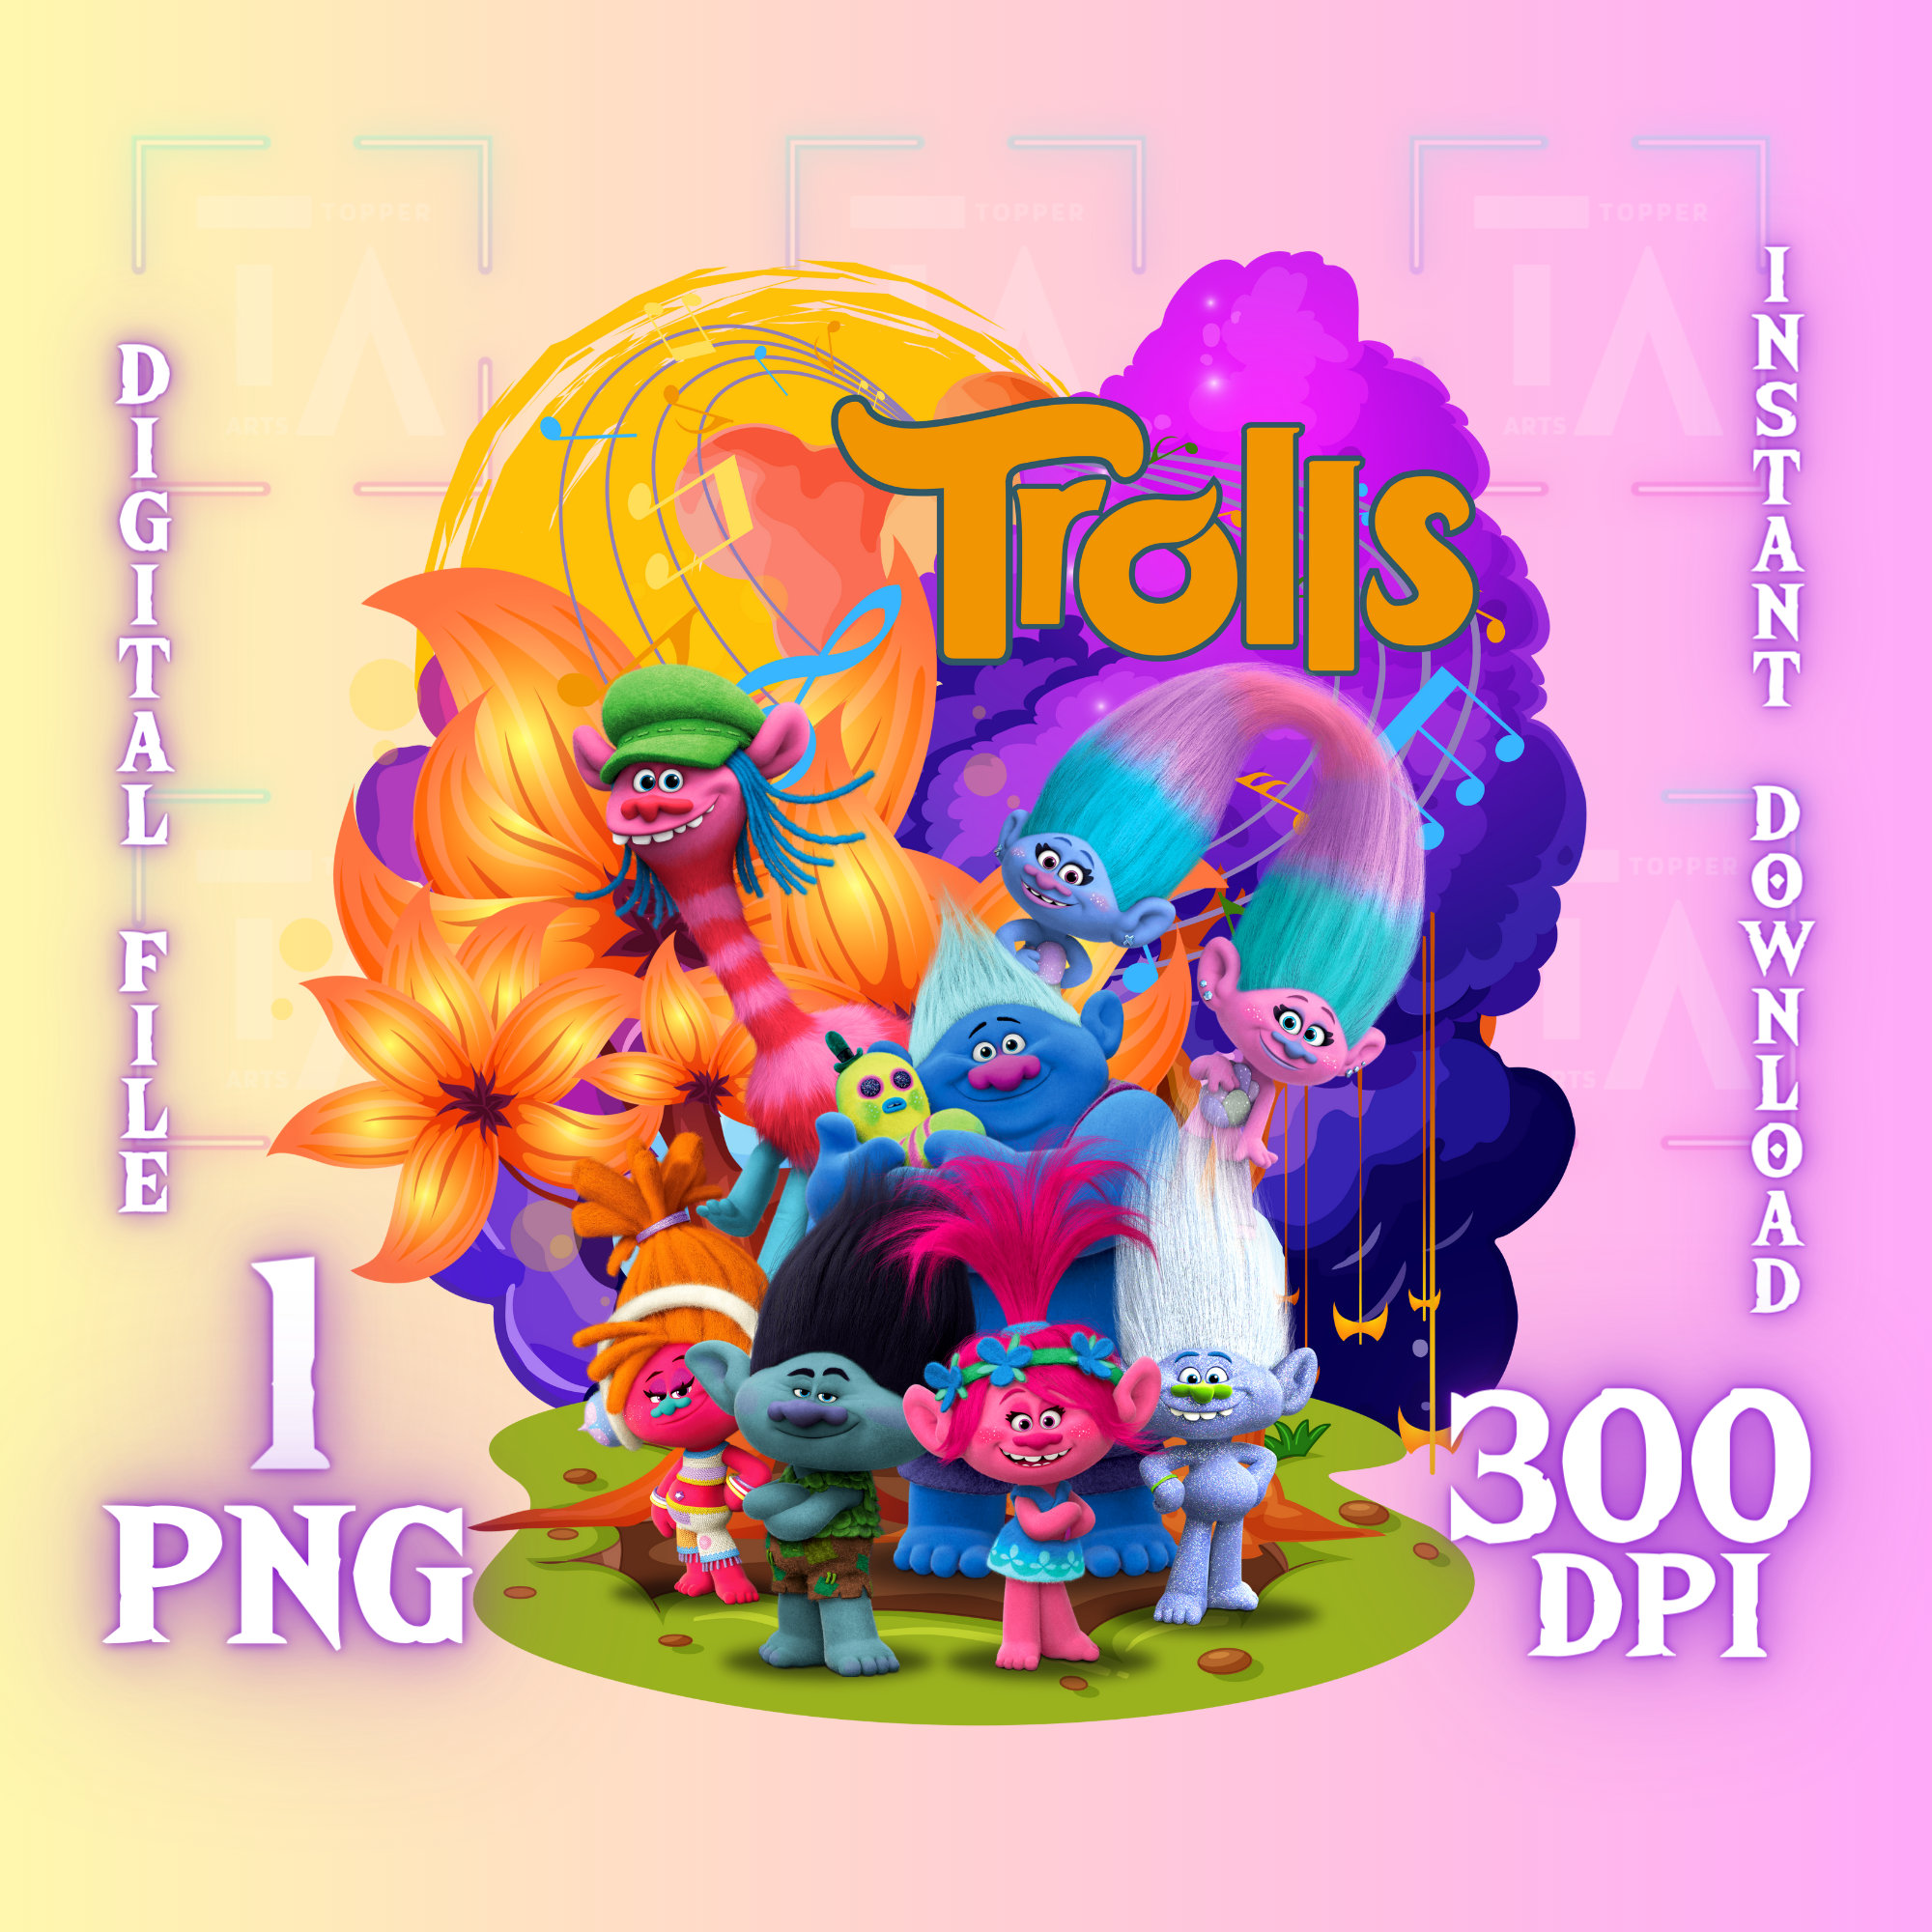 Poppy Trolls World Tour - PNG - Instant Digital Download